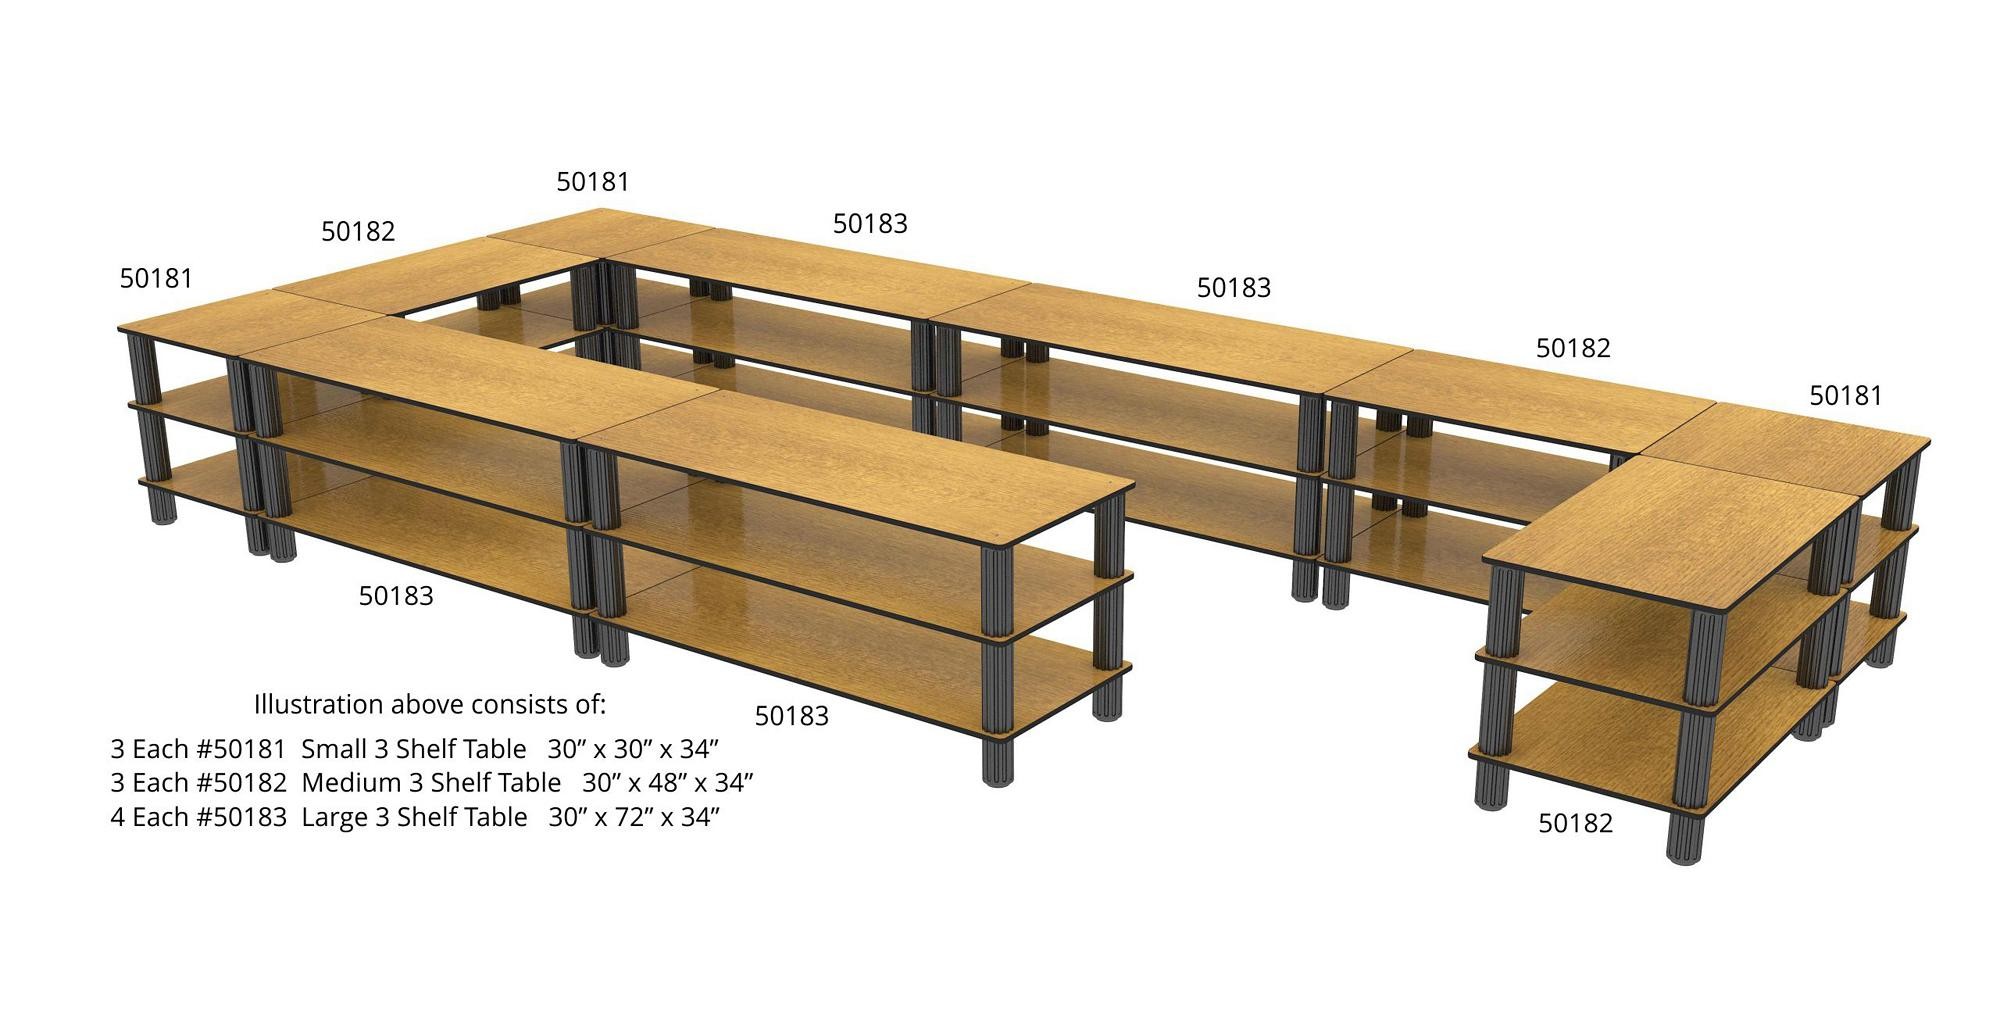 Bon Chef 50181WVWALNUT Small 3-Shelf Flex Table with Walnut Finish, 30" x 30" x 34"